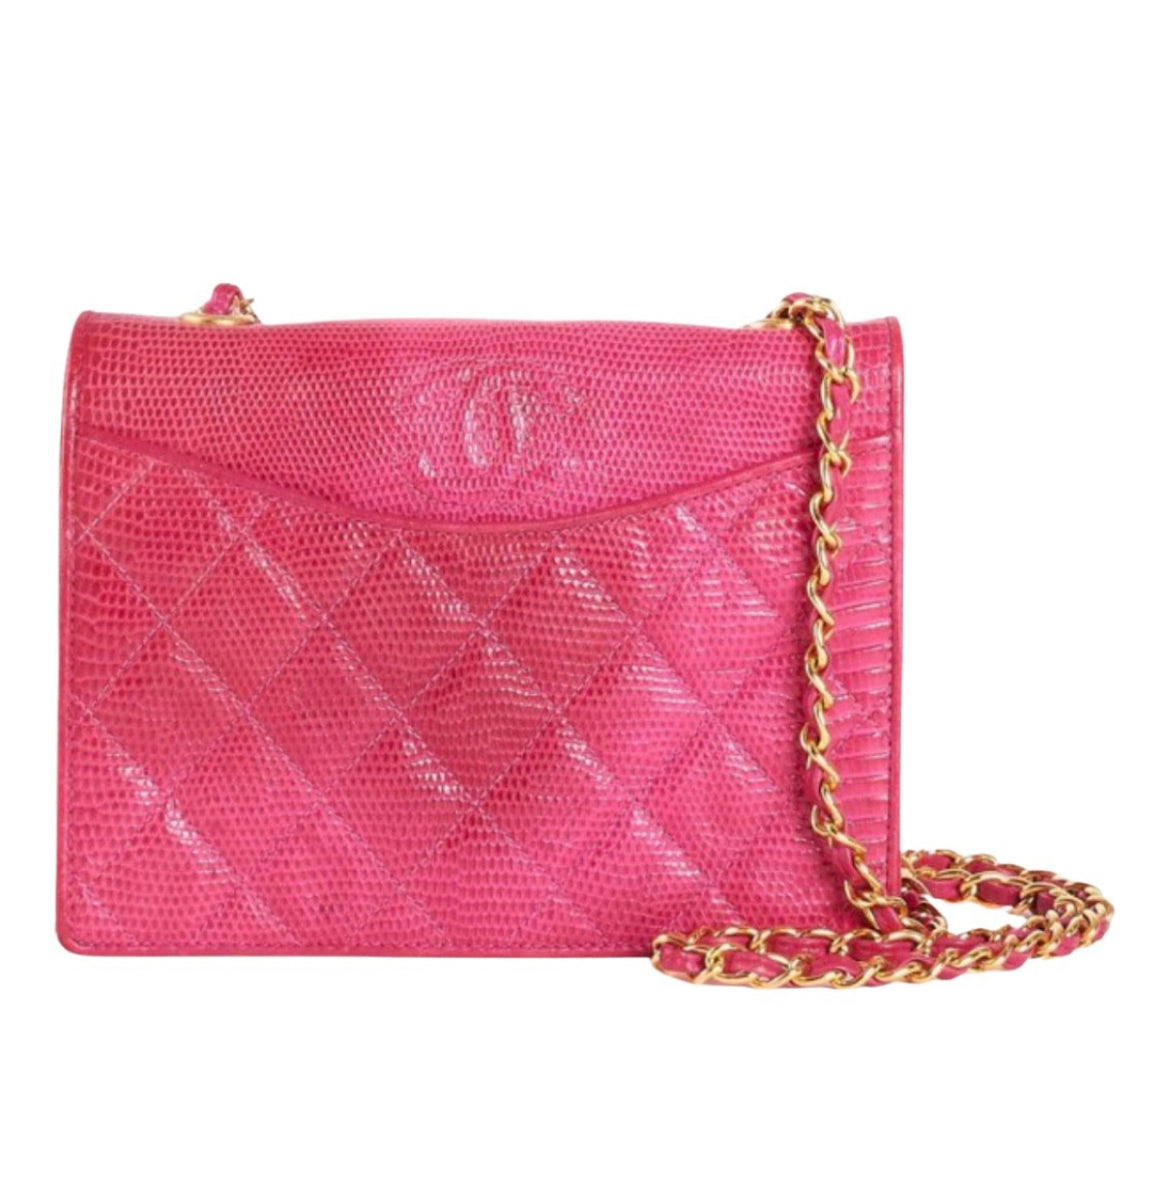 Vintage CHANEL hot pink genuine lizard leather envelop style flap